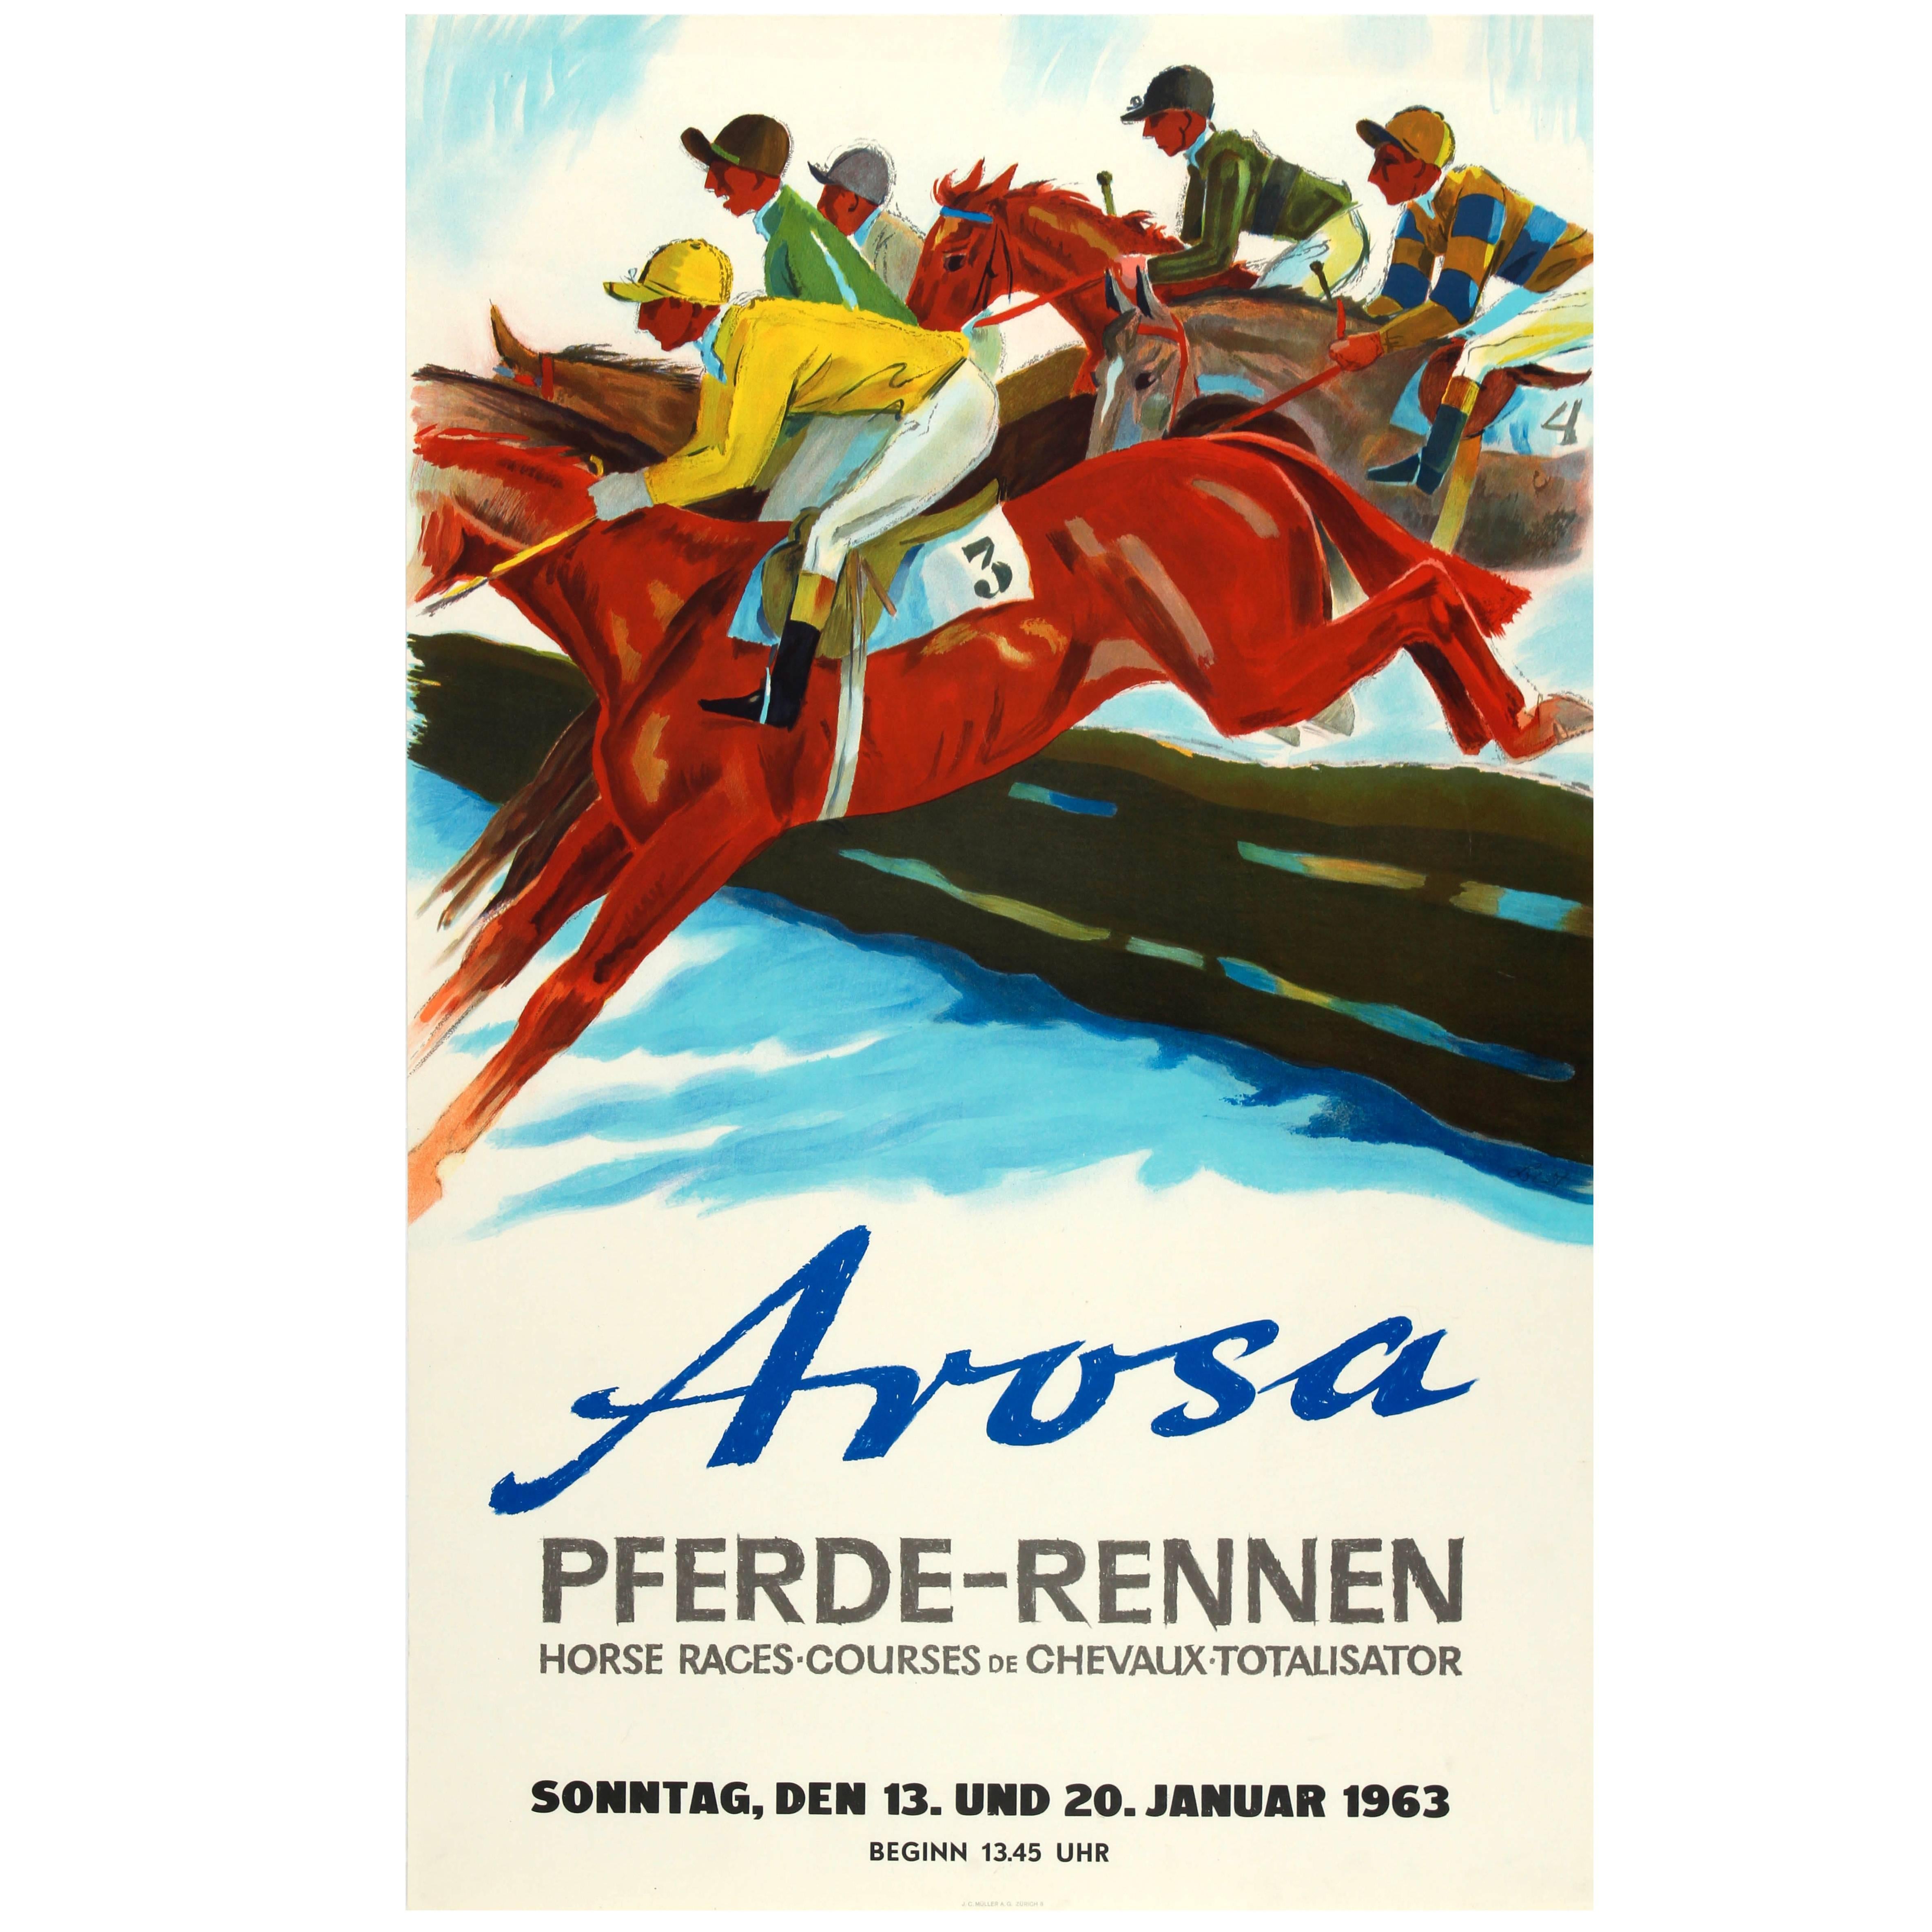 Original Vintage Steeplechase Horse Race Poster for the 1963 Arosa Pferde-Rennen